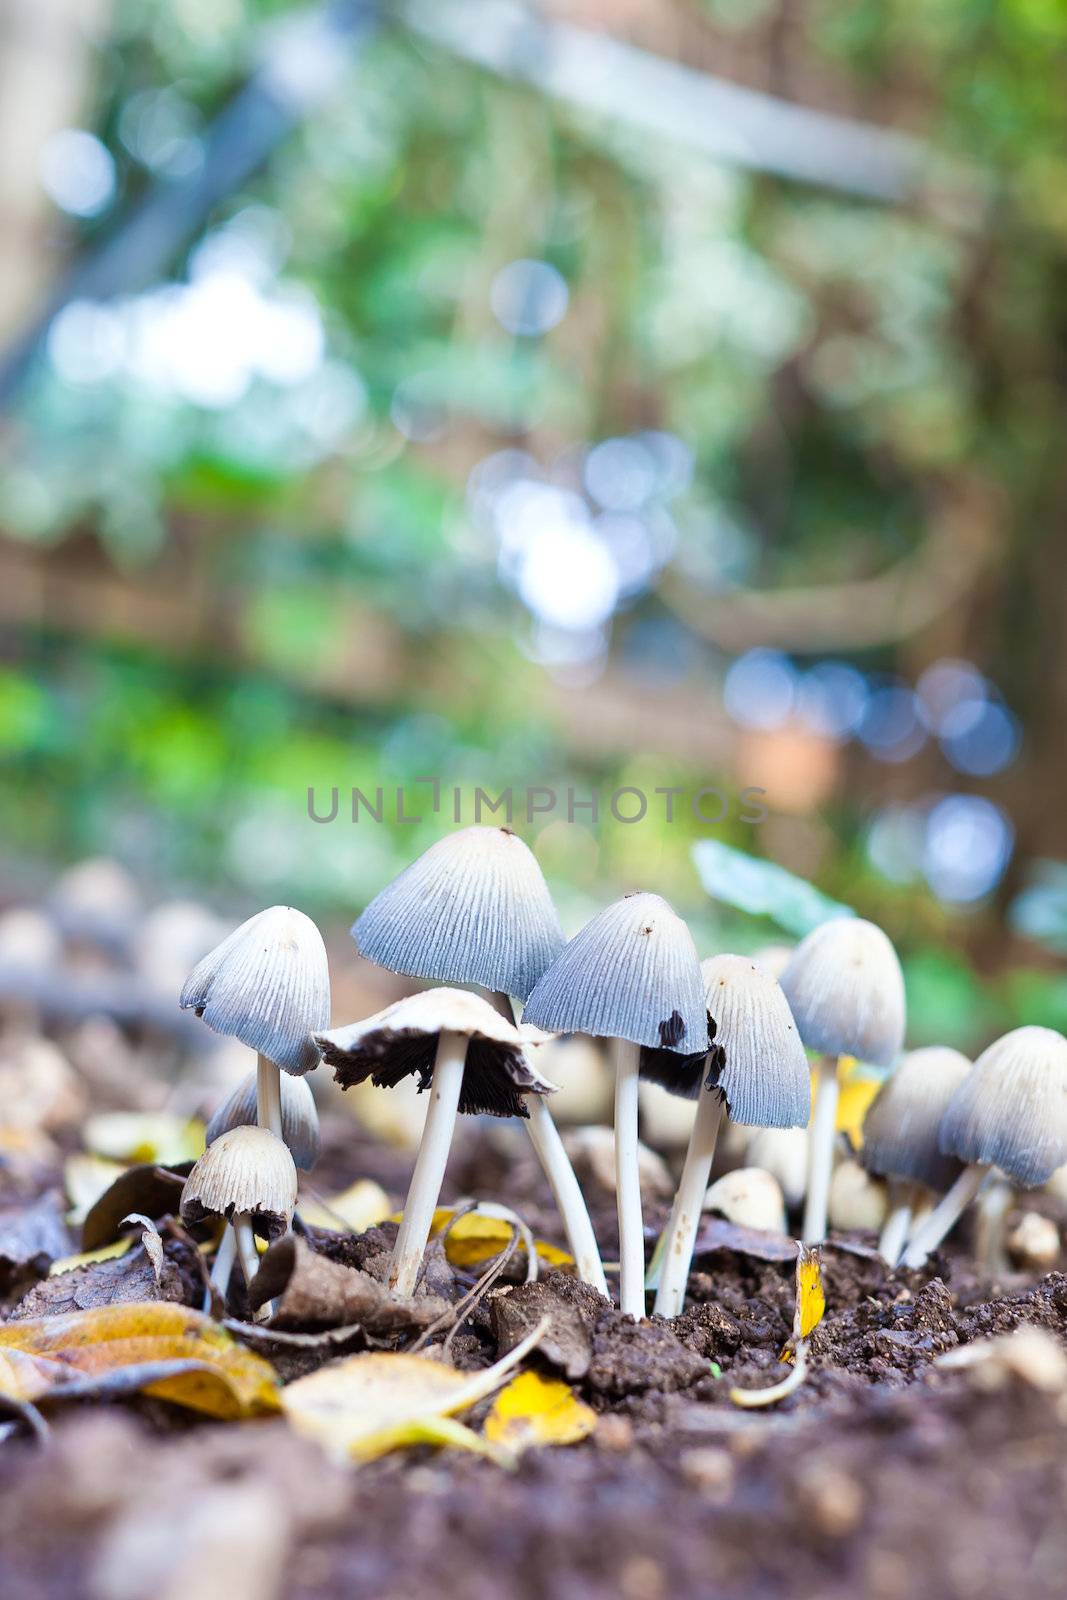 Growing Mushrooms by dario_lo_presti